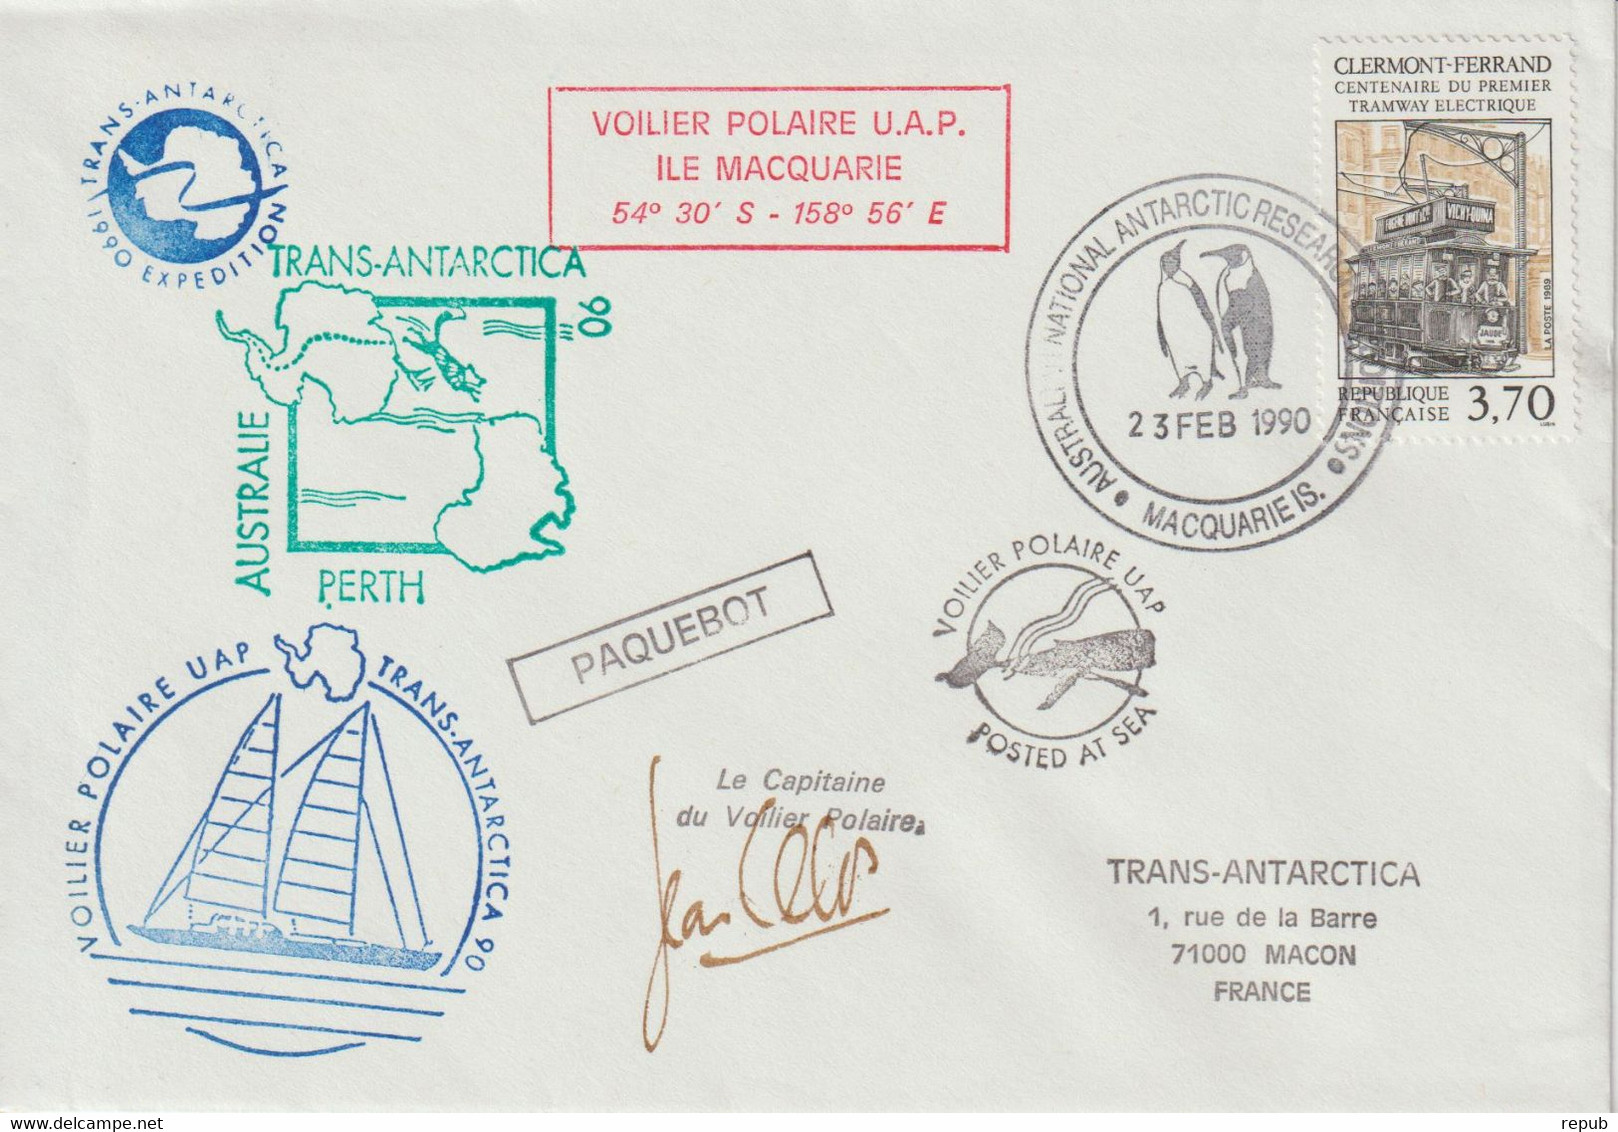 France 1990 Mission Trans Antartica 90 Escale Australie - Maritime Post